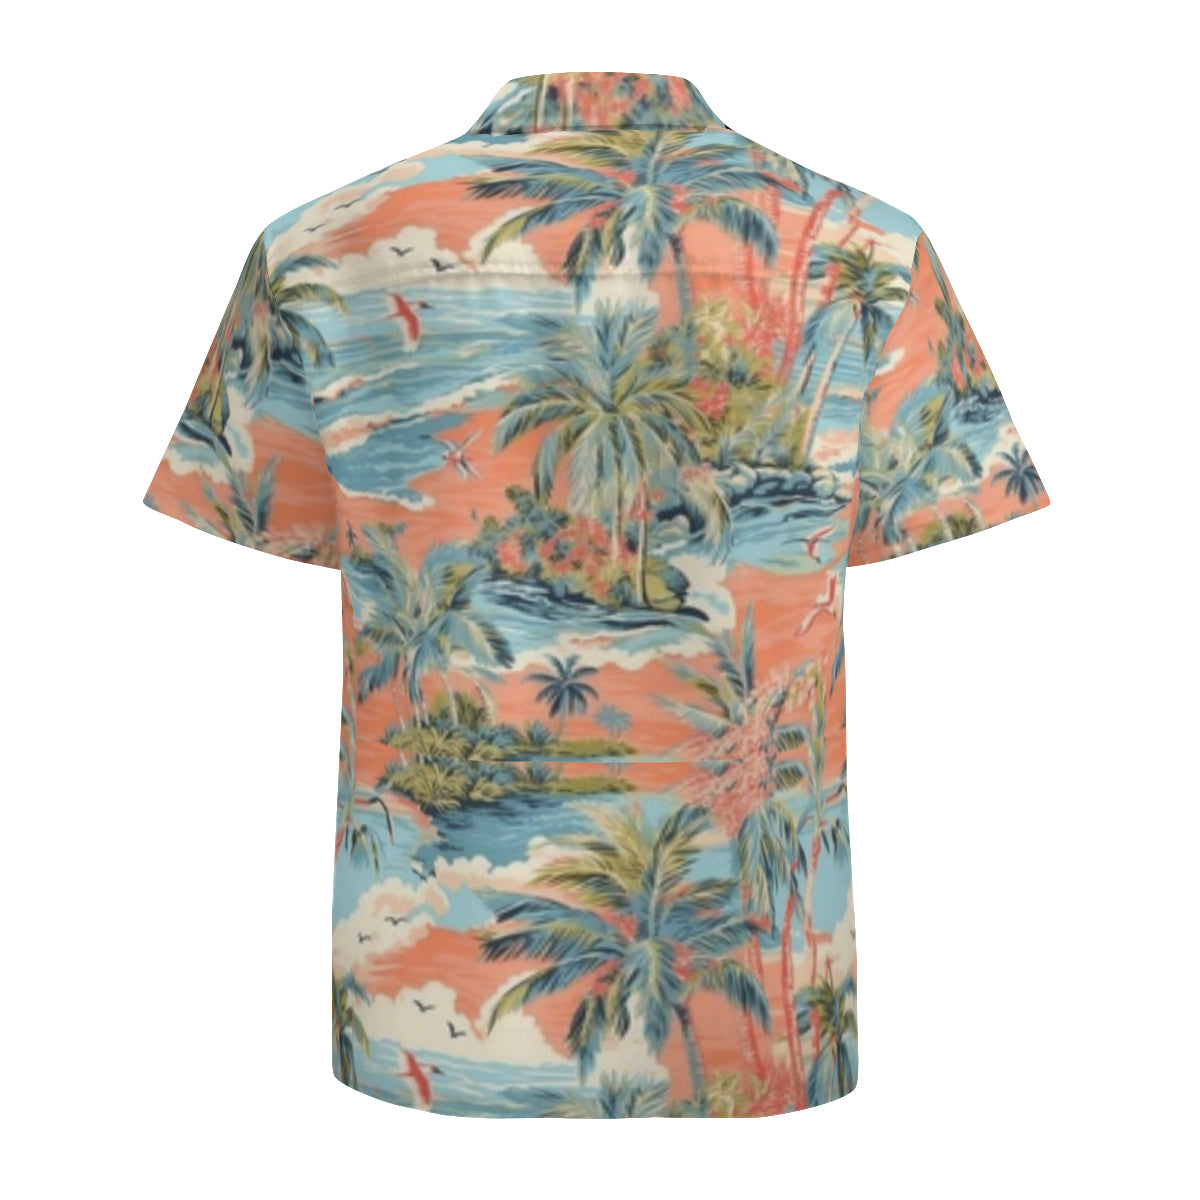 Hawaiian shirt - Orange and blue scene